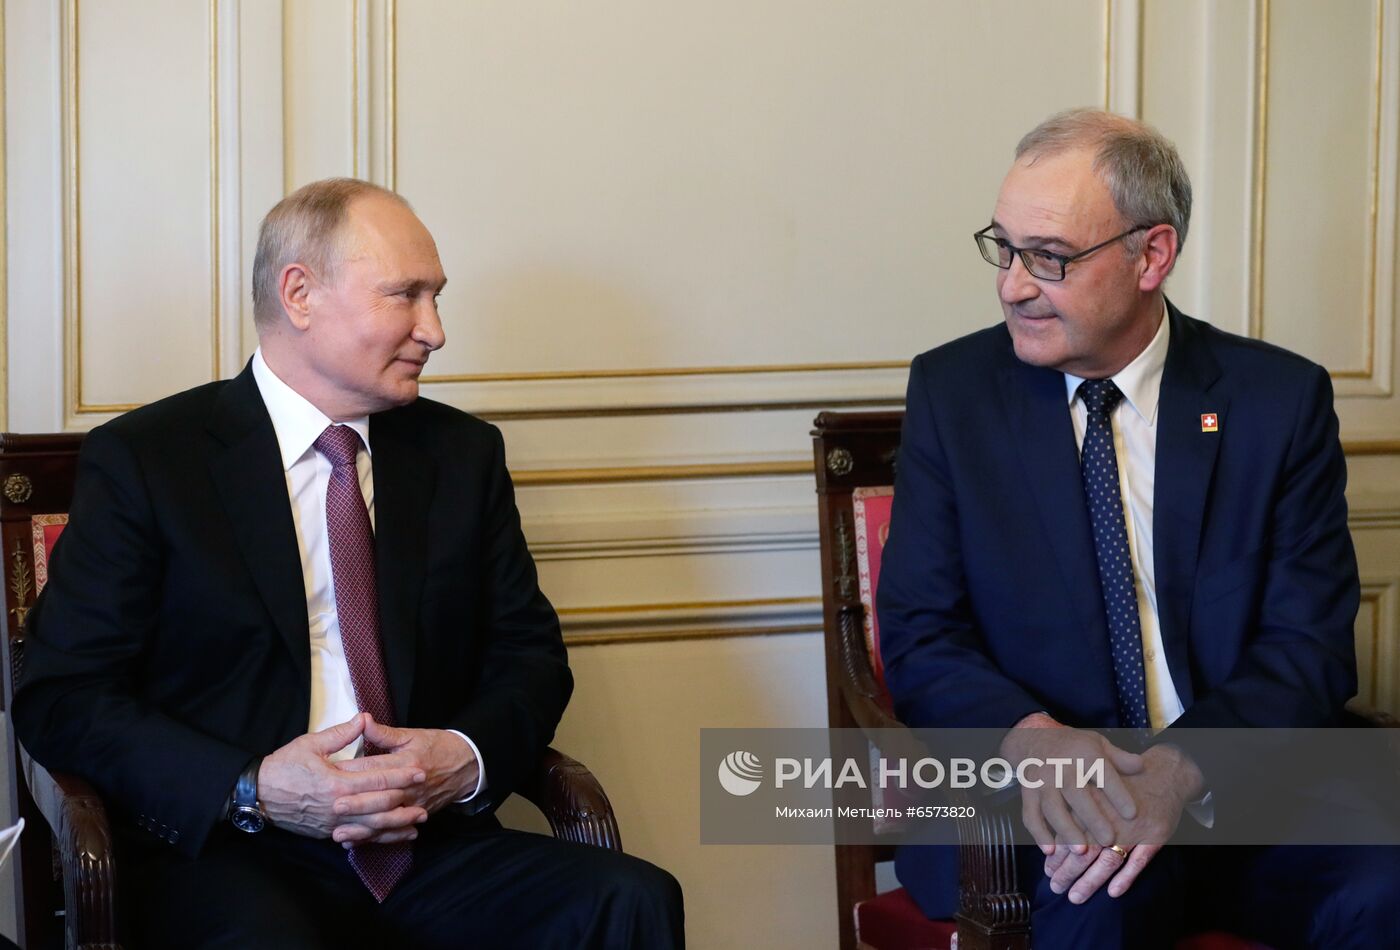 Встреча президента РФ В. Путина с президентом Швейцарии Ги Пармеленом в Женеве